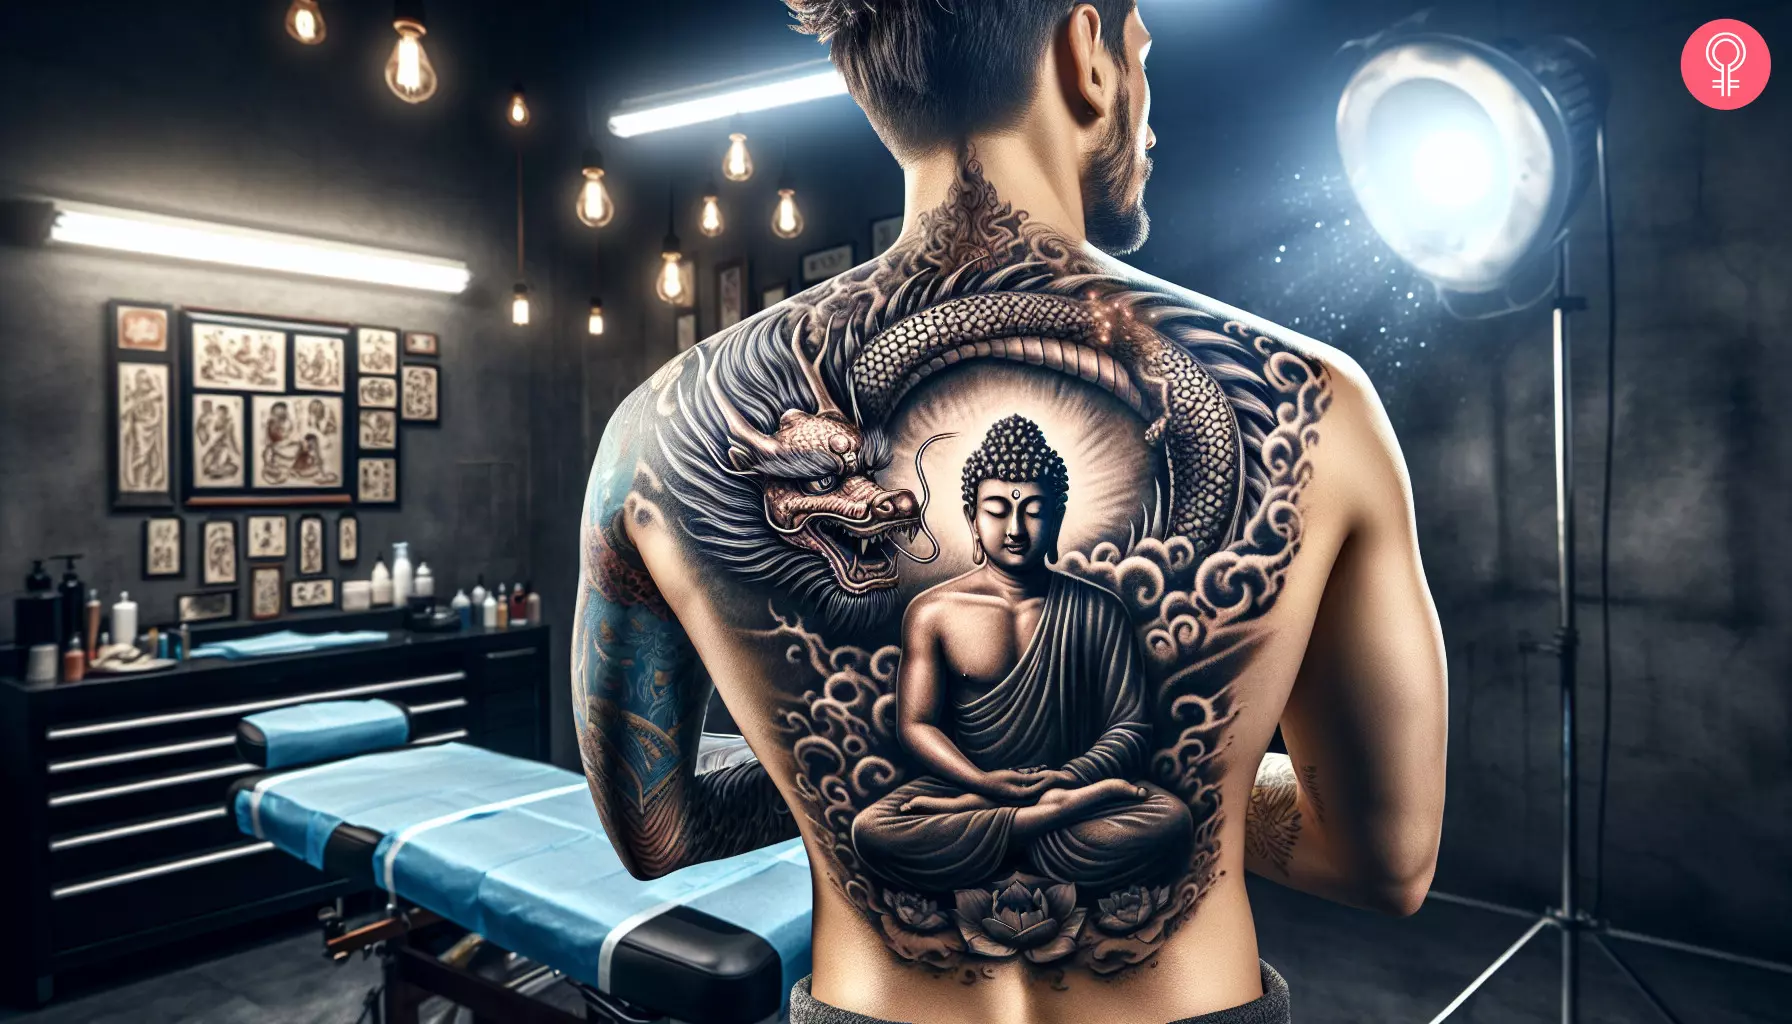 A dragon near Buddha tattoo on the back 